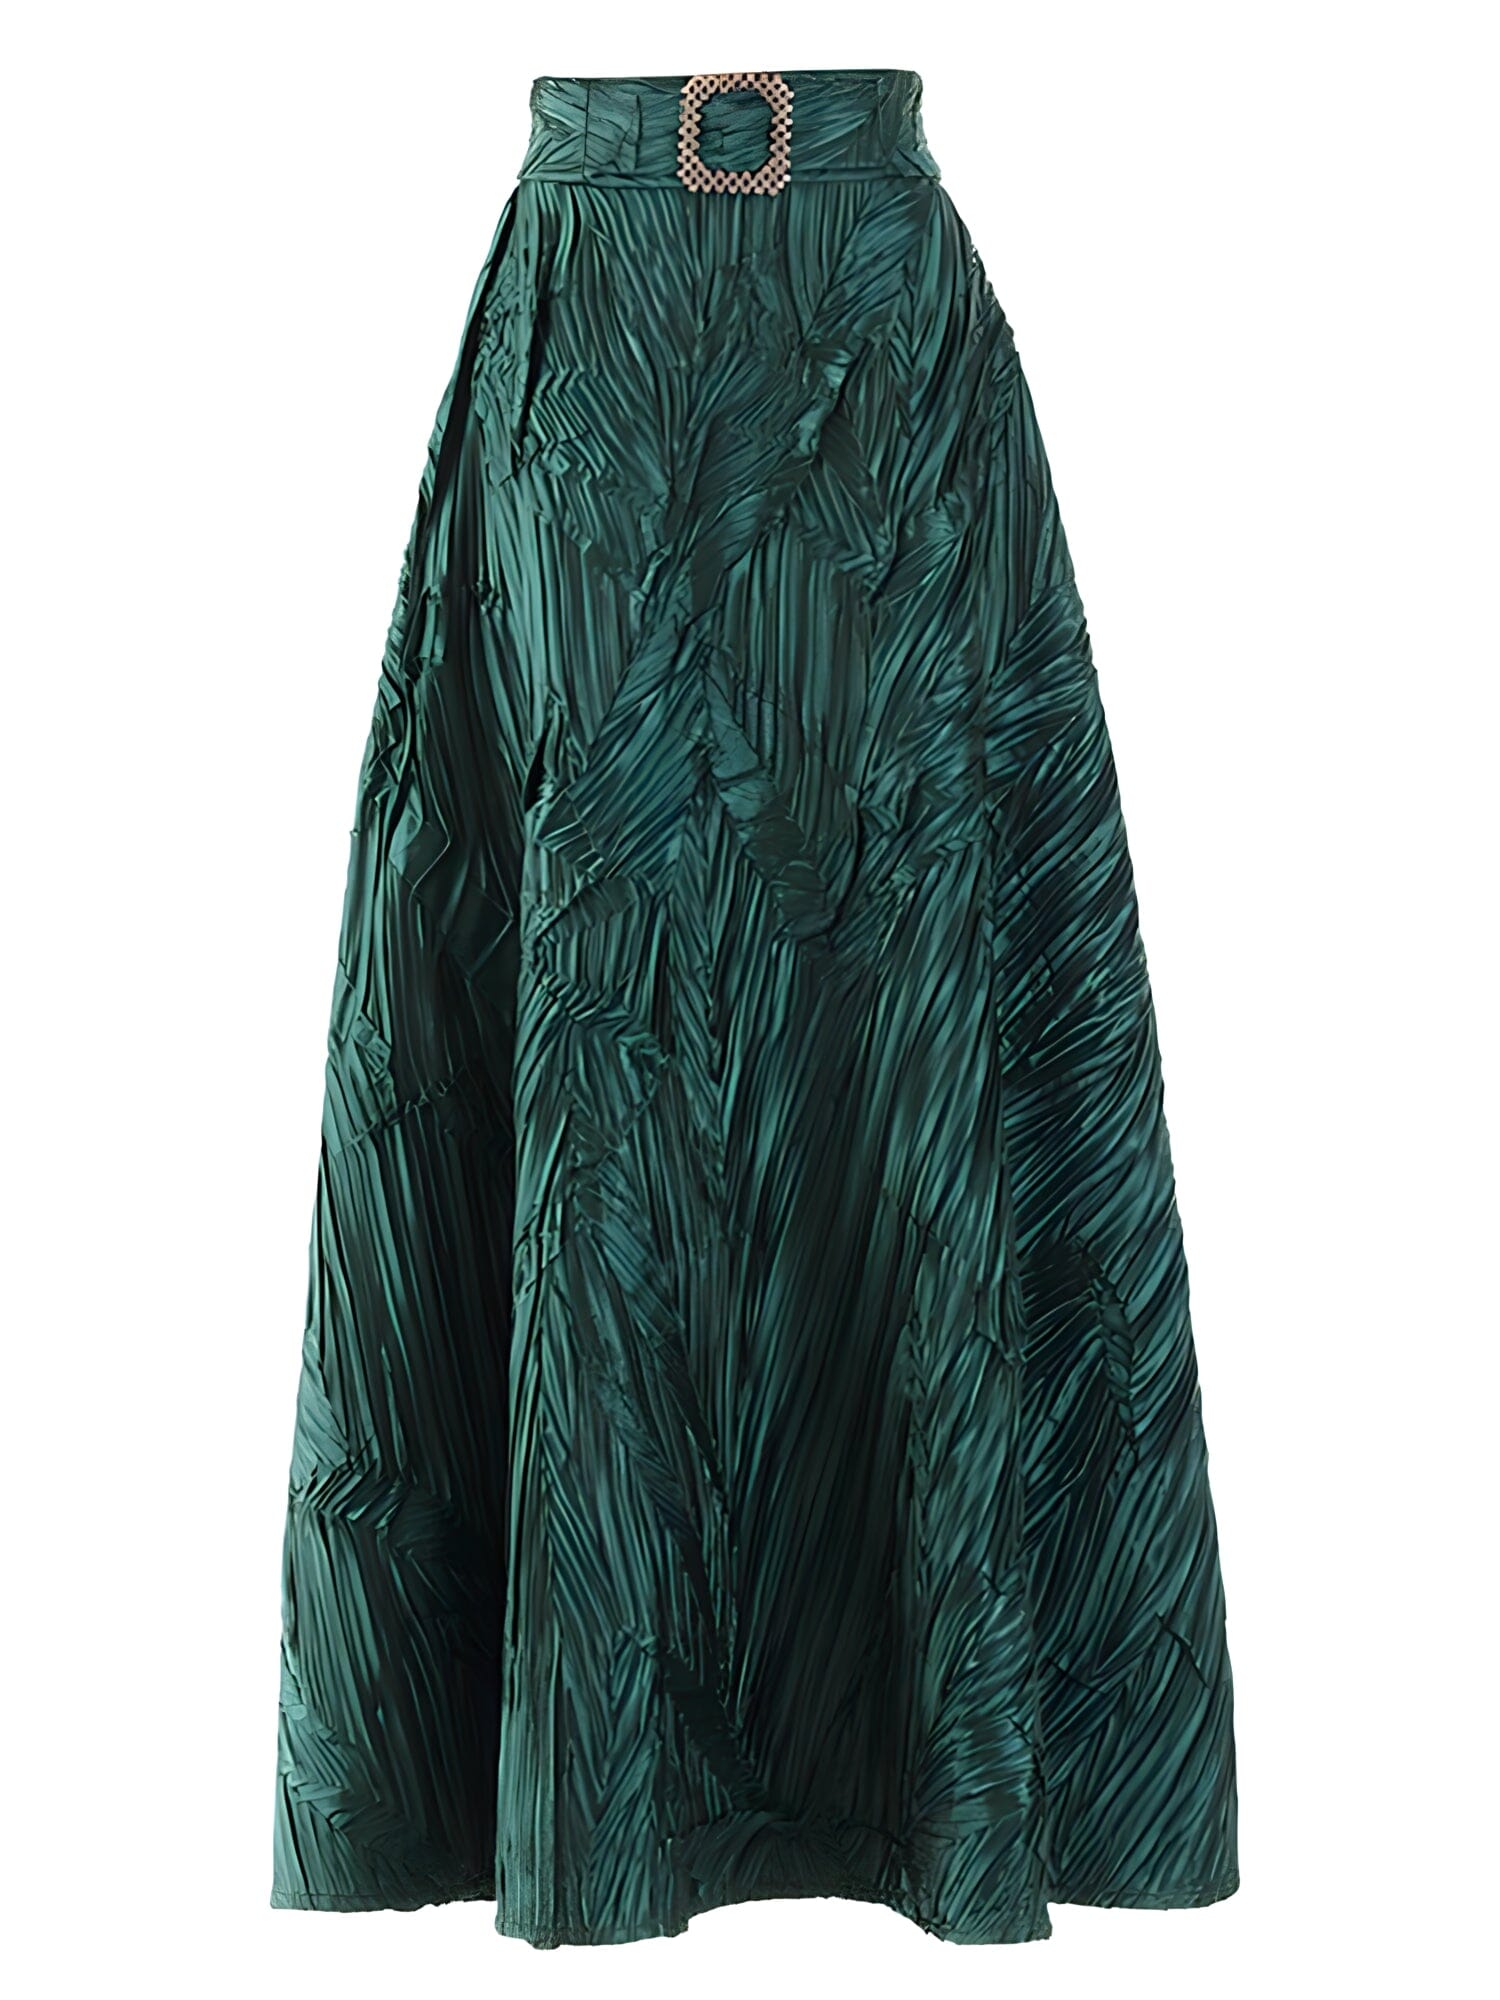 The Irish High Waist Skirt - Multiple Colors 0 SA Styles Green S 